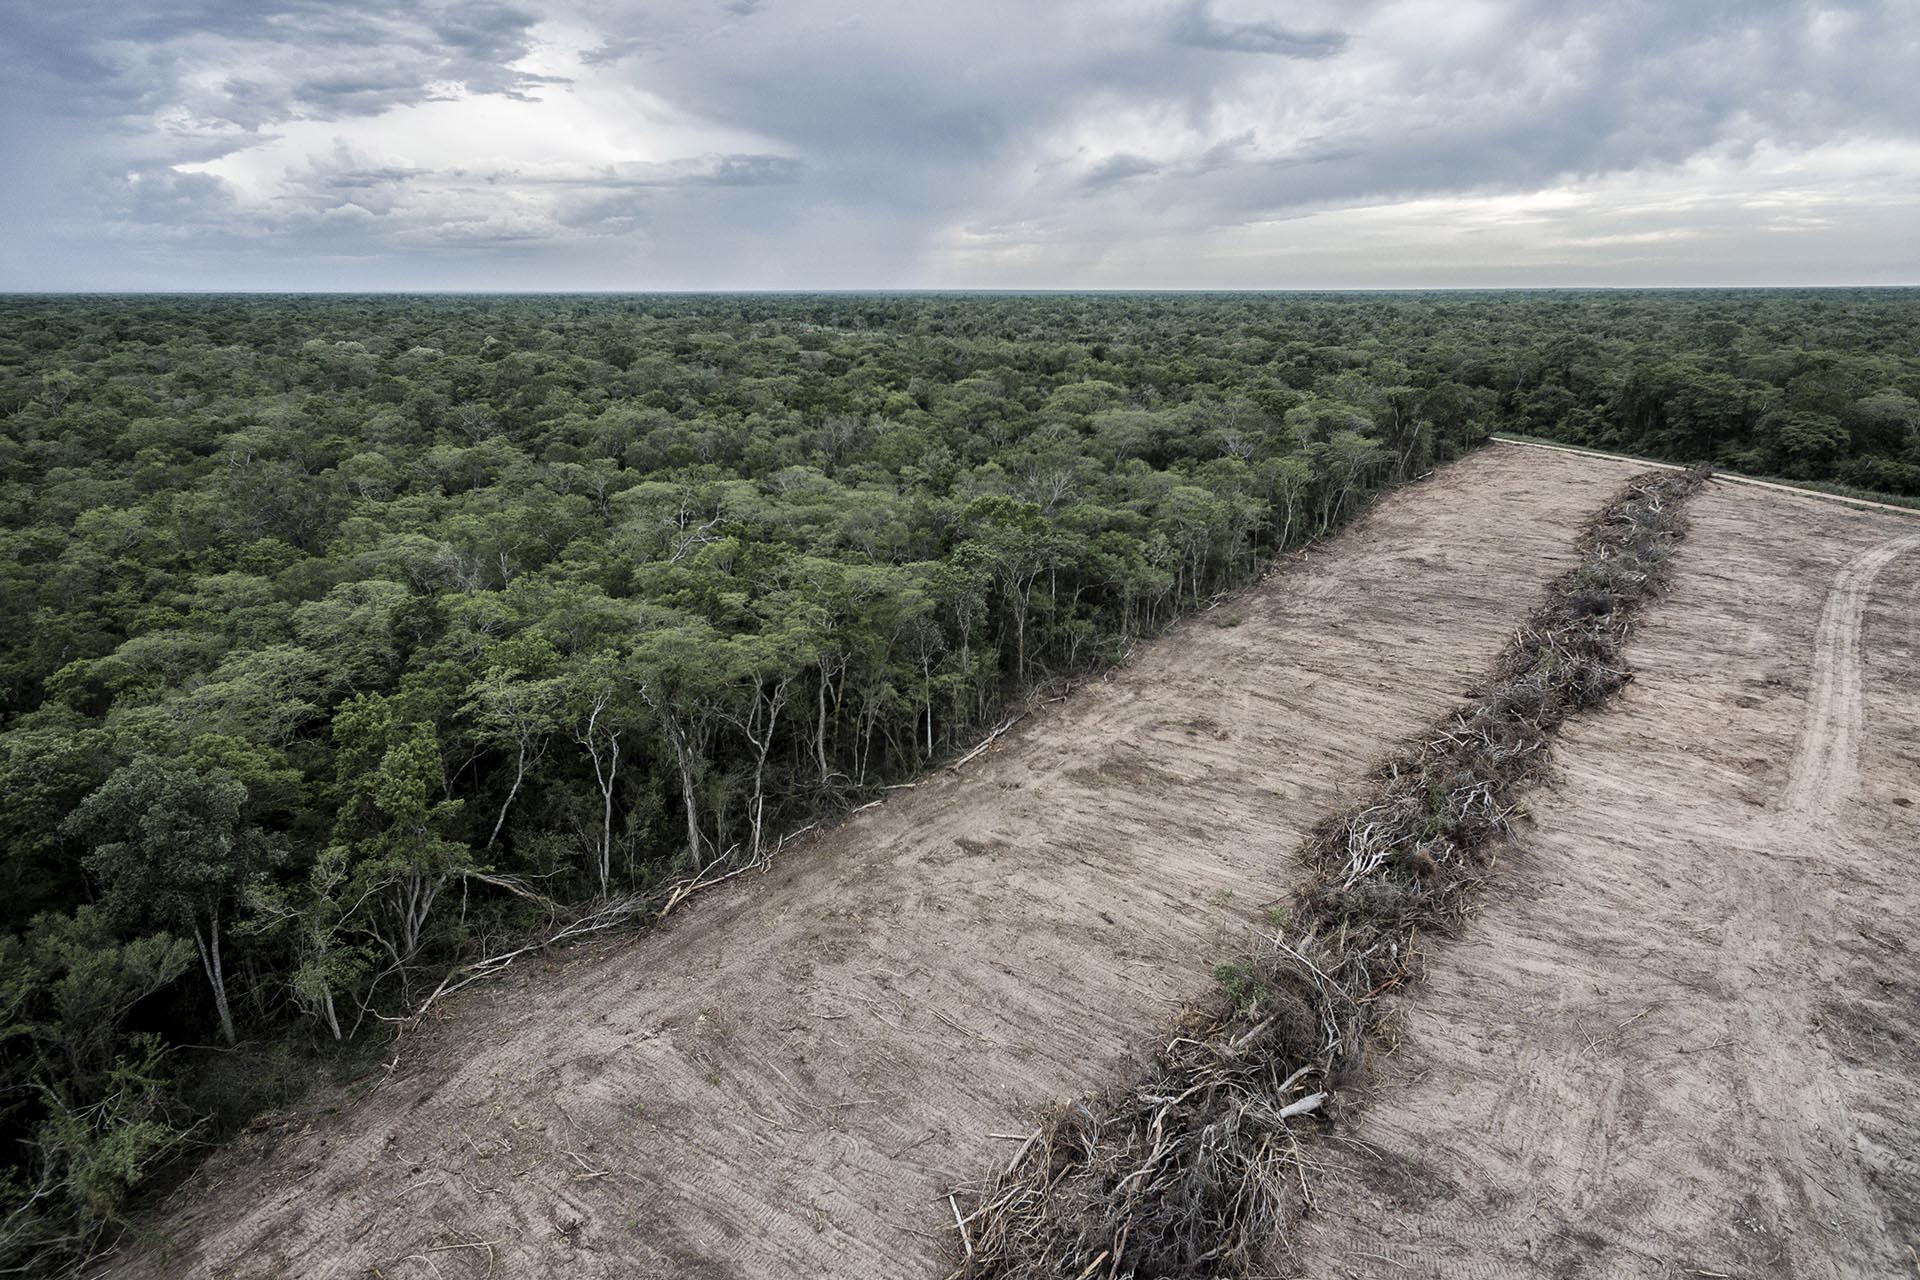 https://cri.org/wp-content/uploads/2023/05/Deforestation-Image.jpg